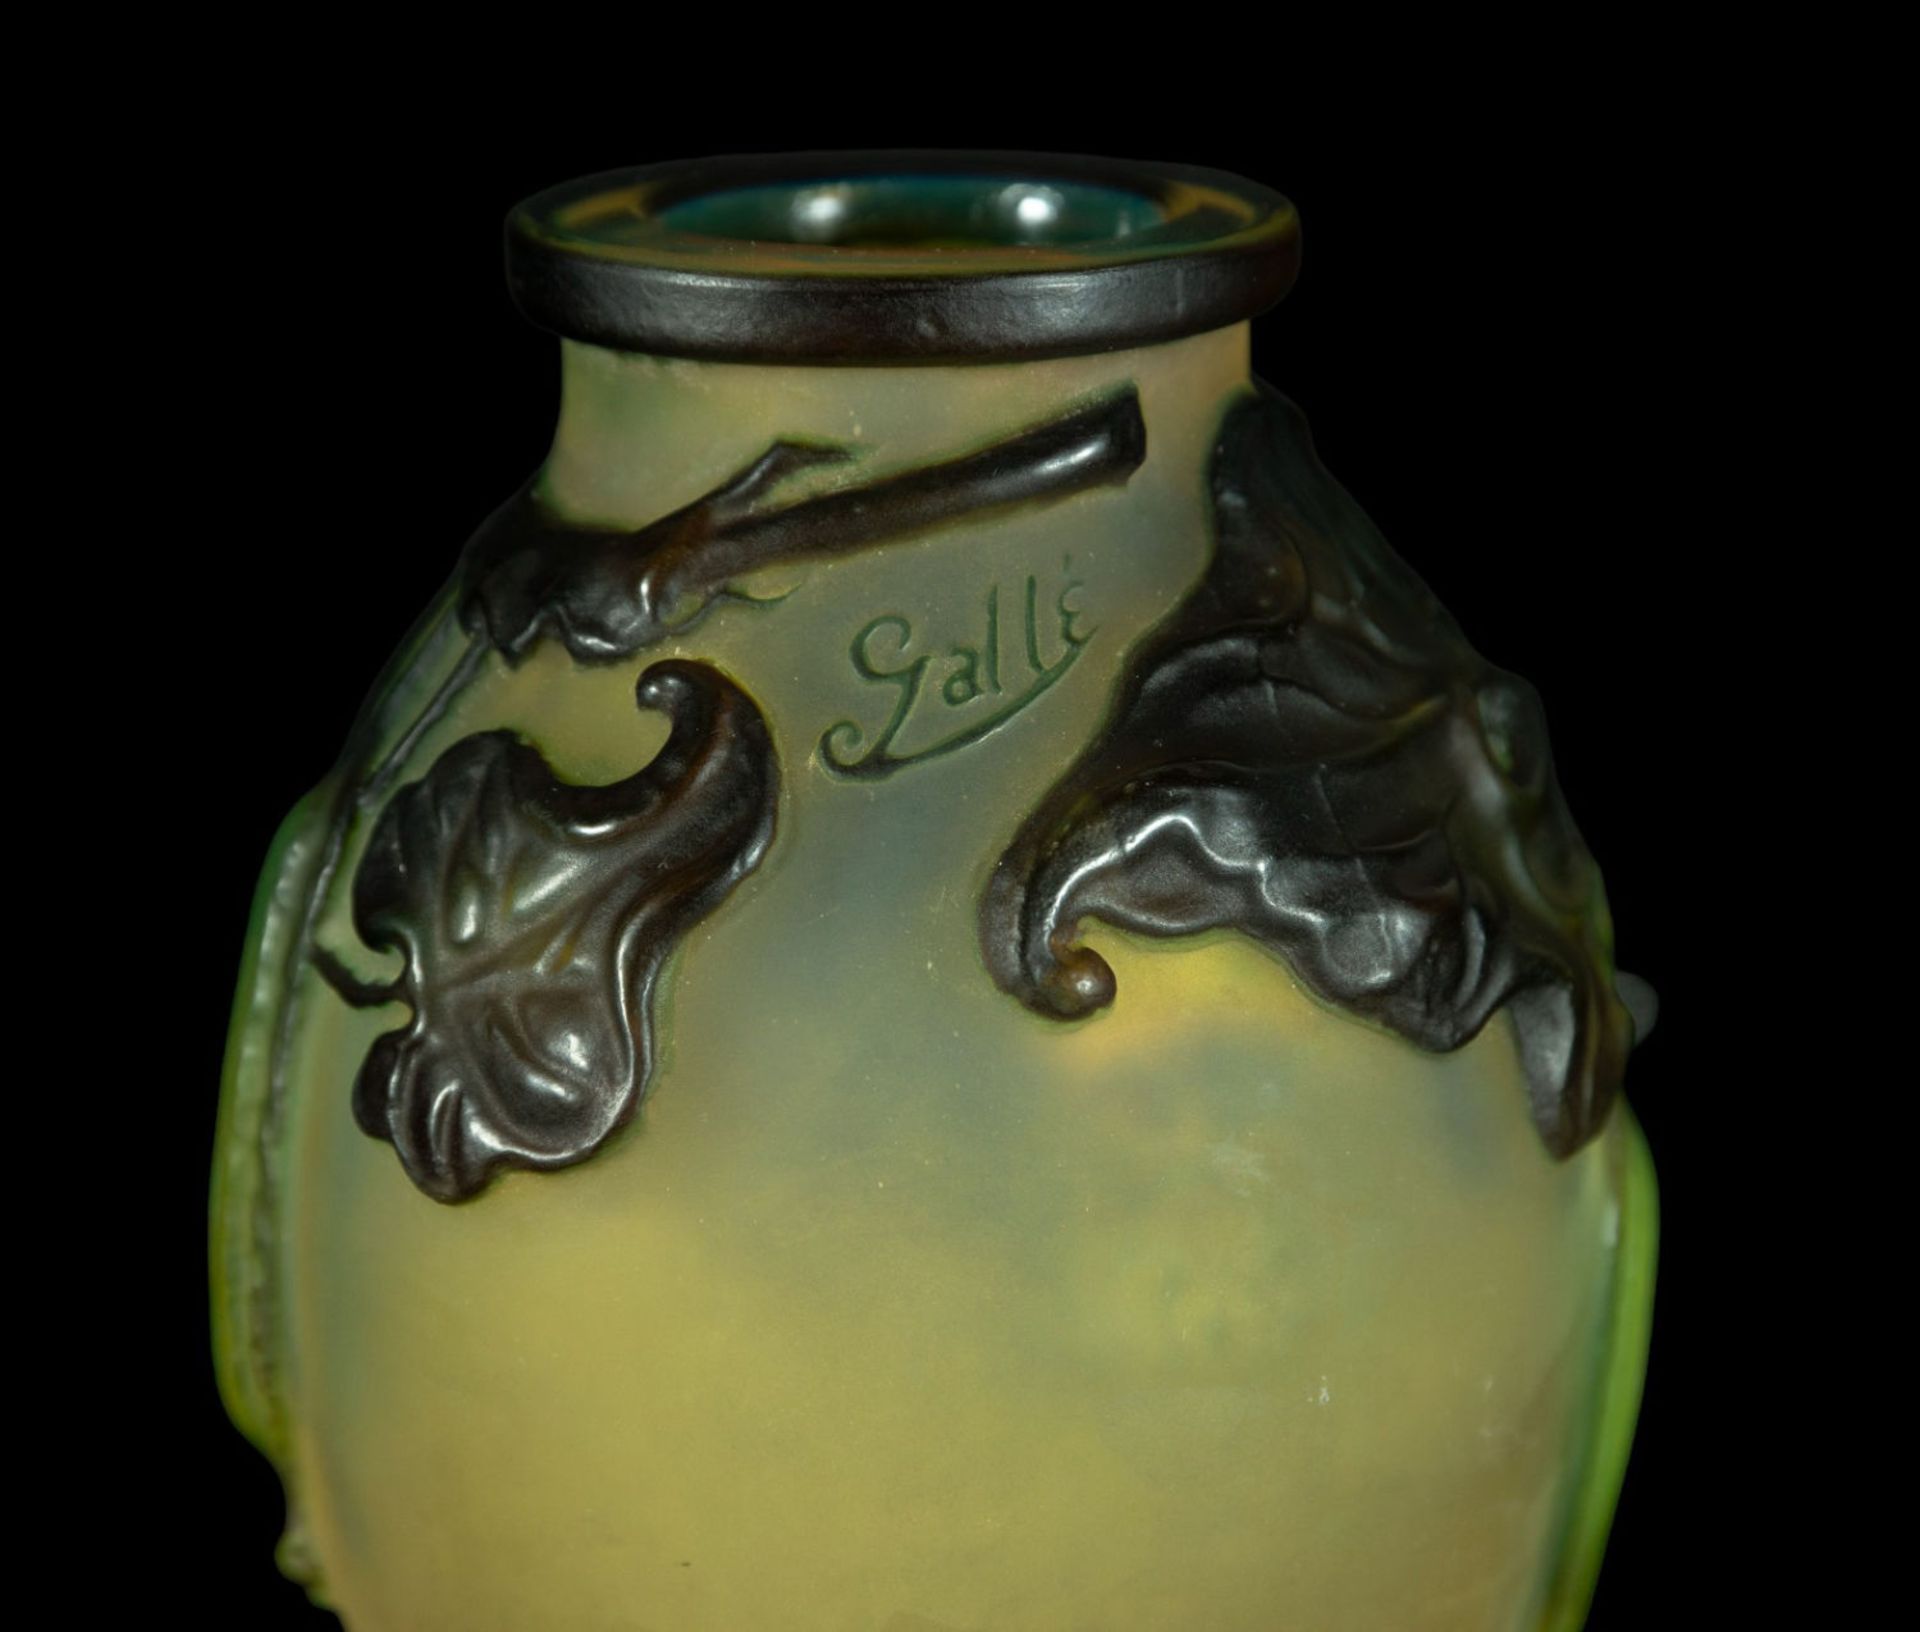 Exquisite Art Nouveau Gallé vase in blown glass and polychrome vitreous paste, 1900s - 1920s - Image 4 of 5